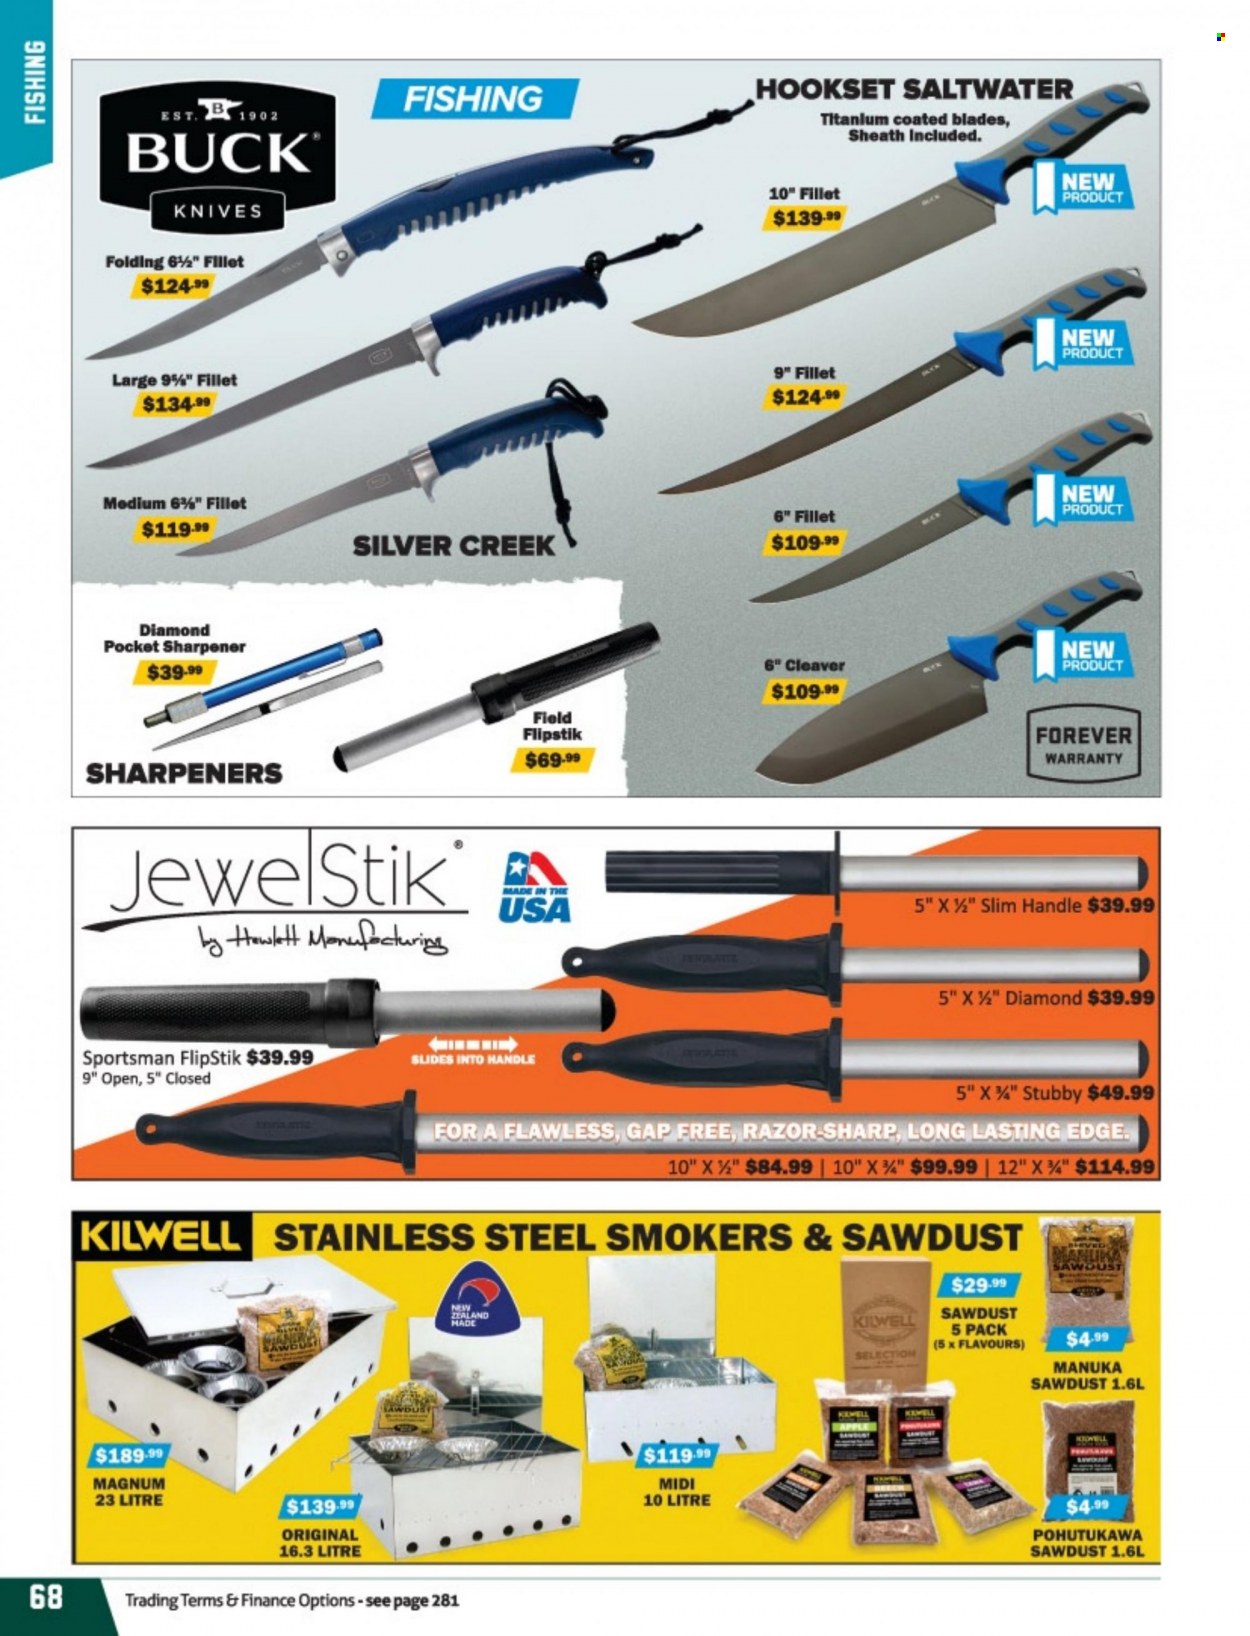 thumbnail - Hunting & Fishing mailer - Sales products - knife, sharpener. Page 68.